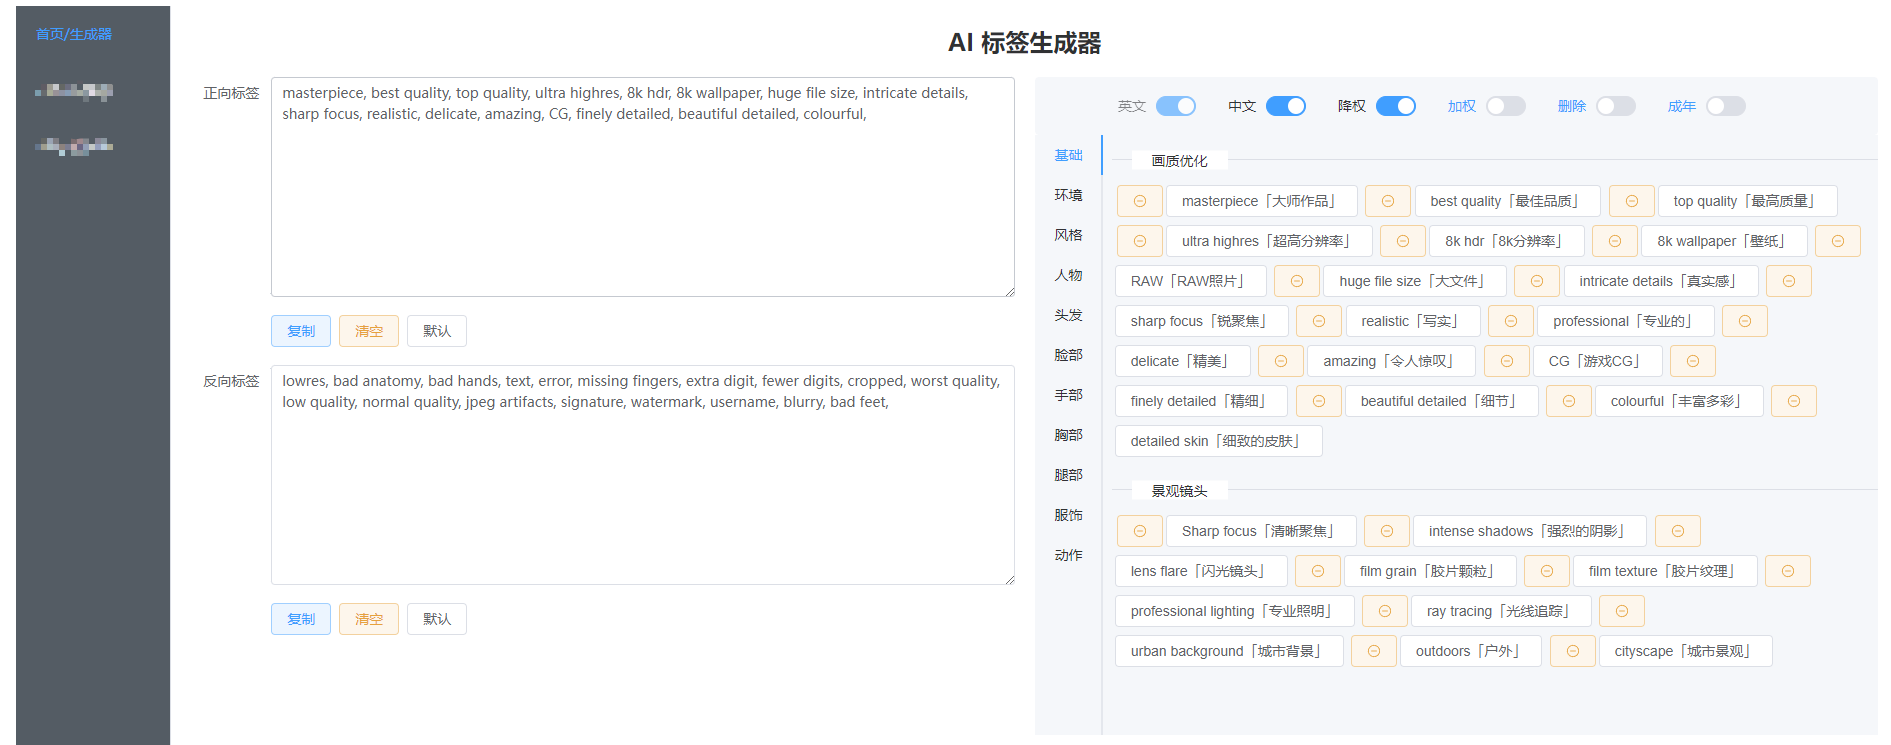 最新版本 Stable Diffusion 开源 AI 绘画工具之中文自动提词篇